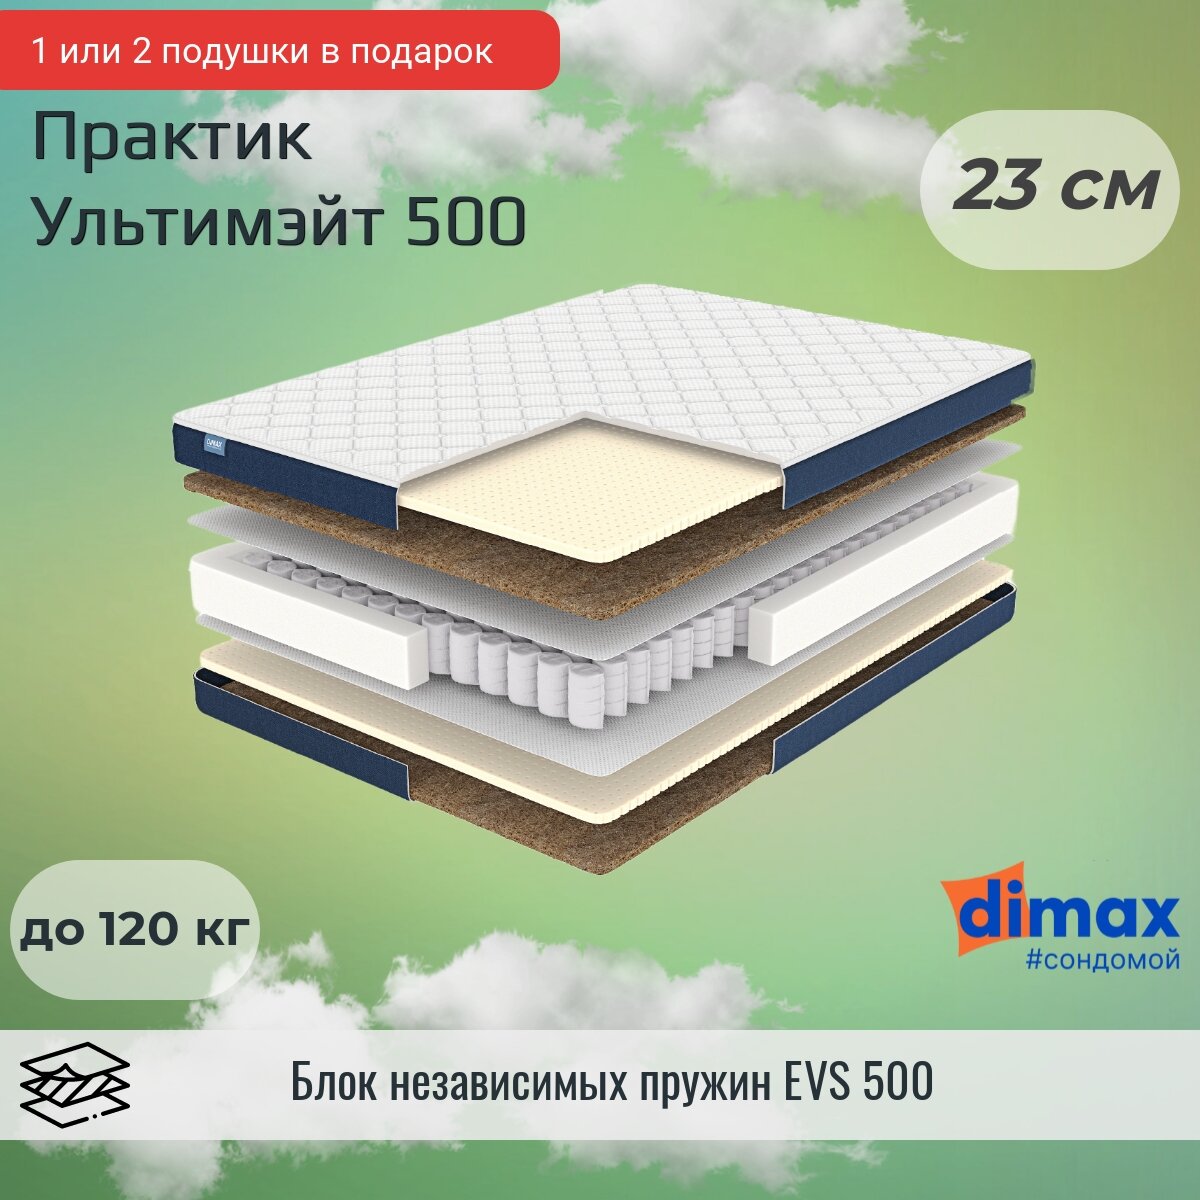 Матрас Dimax Практик Ультимэйт 500 70х200